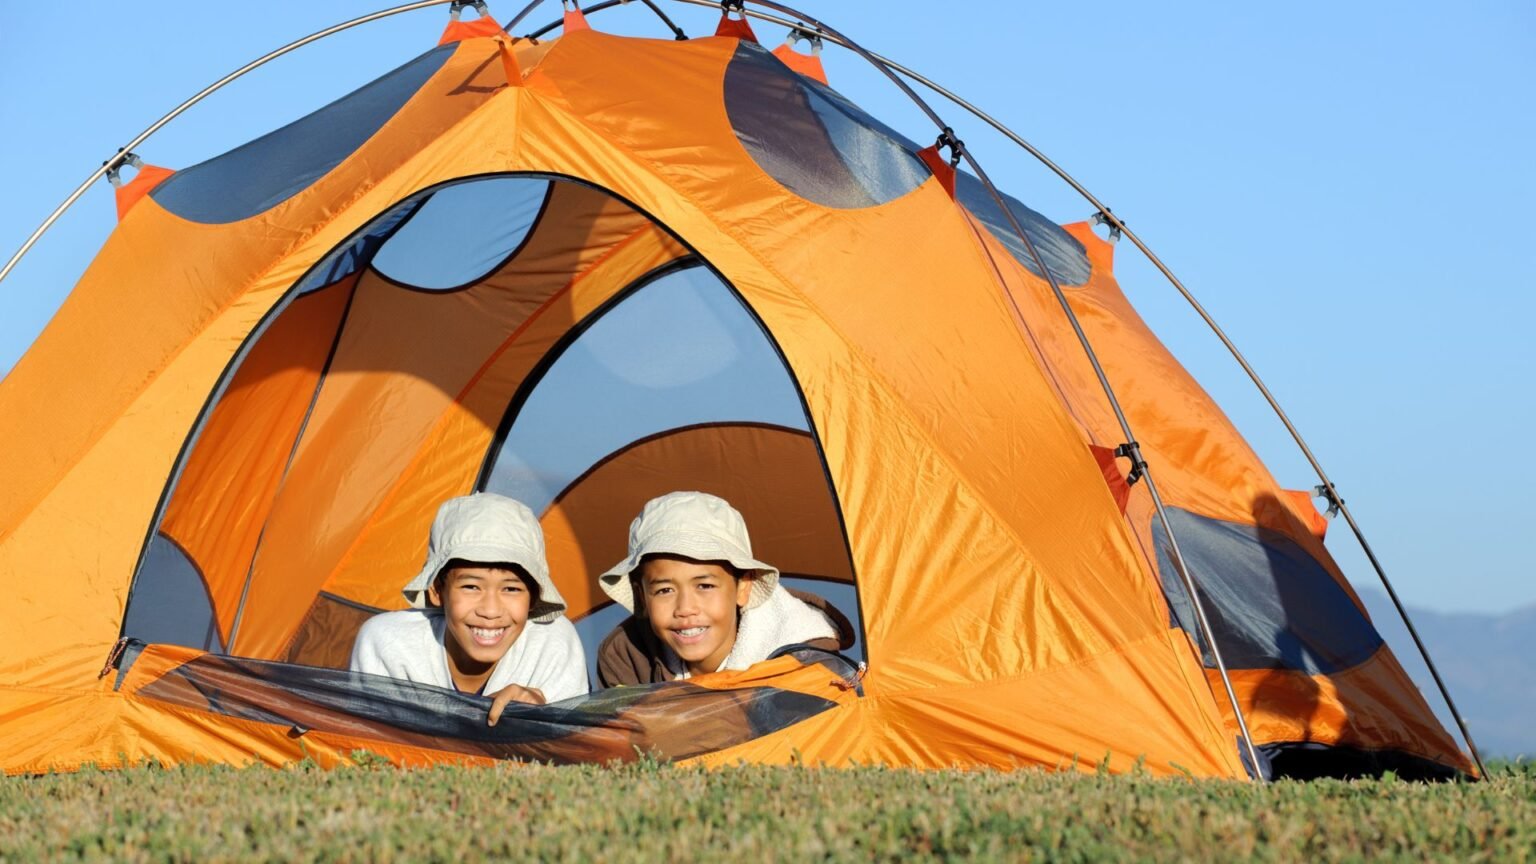 tent large enough for a queen air mattress